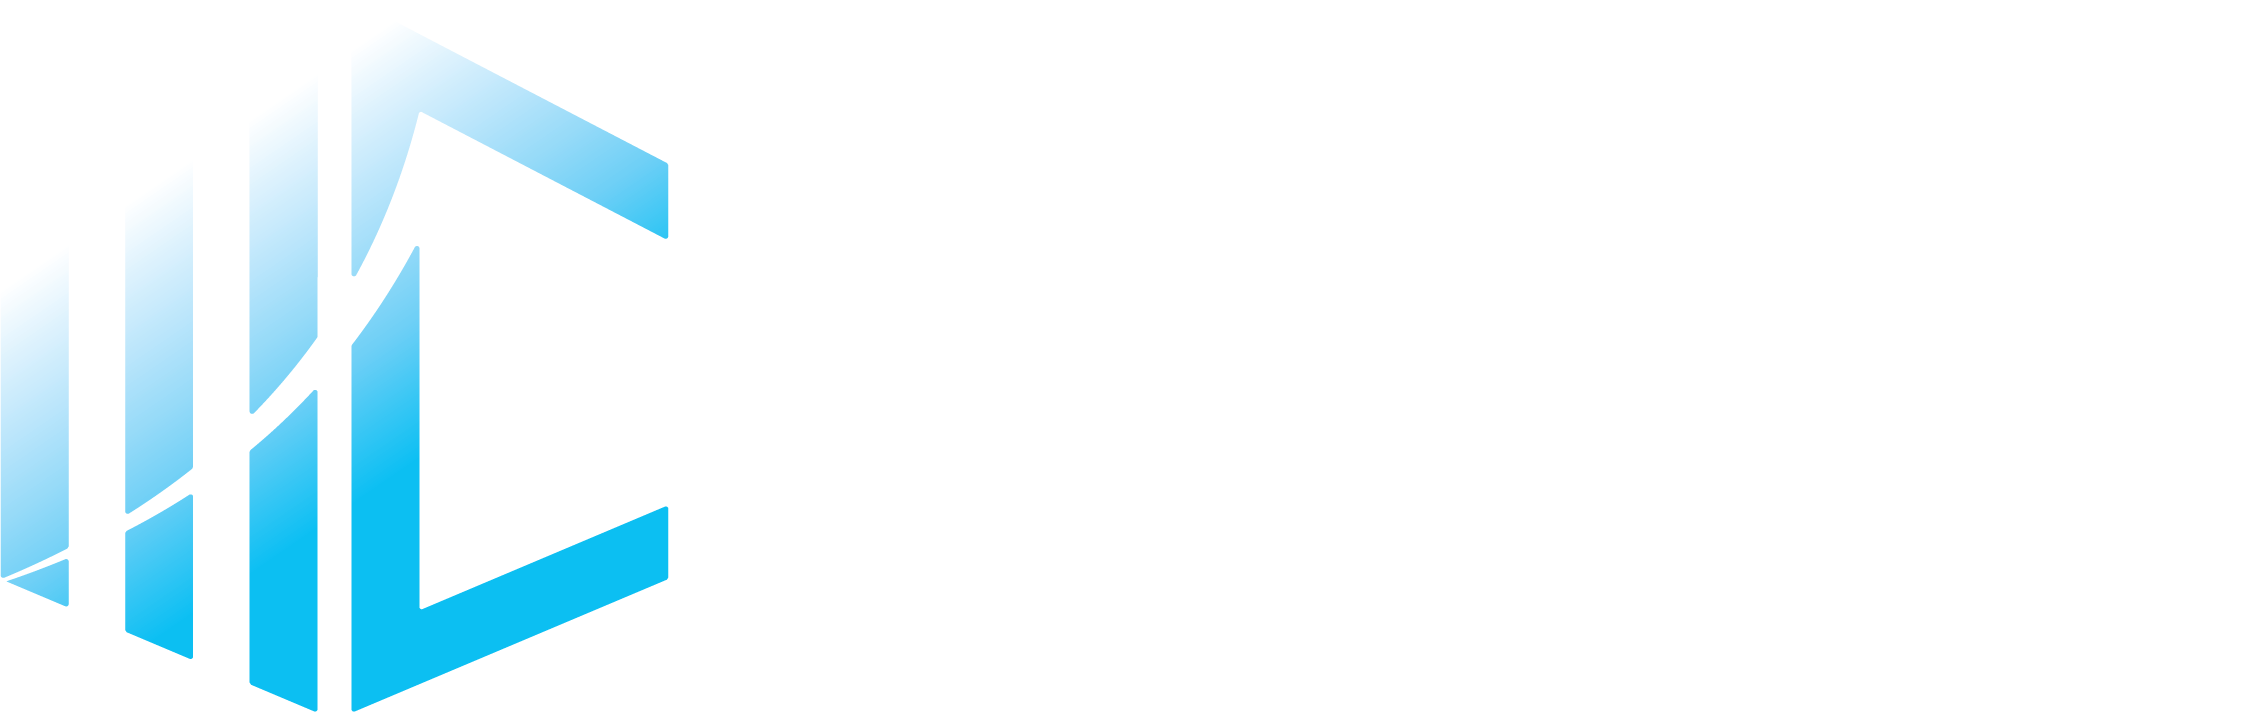 Center for Advancing the American Dream Logo